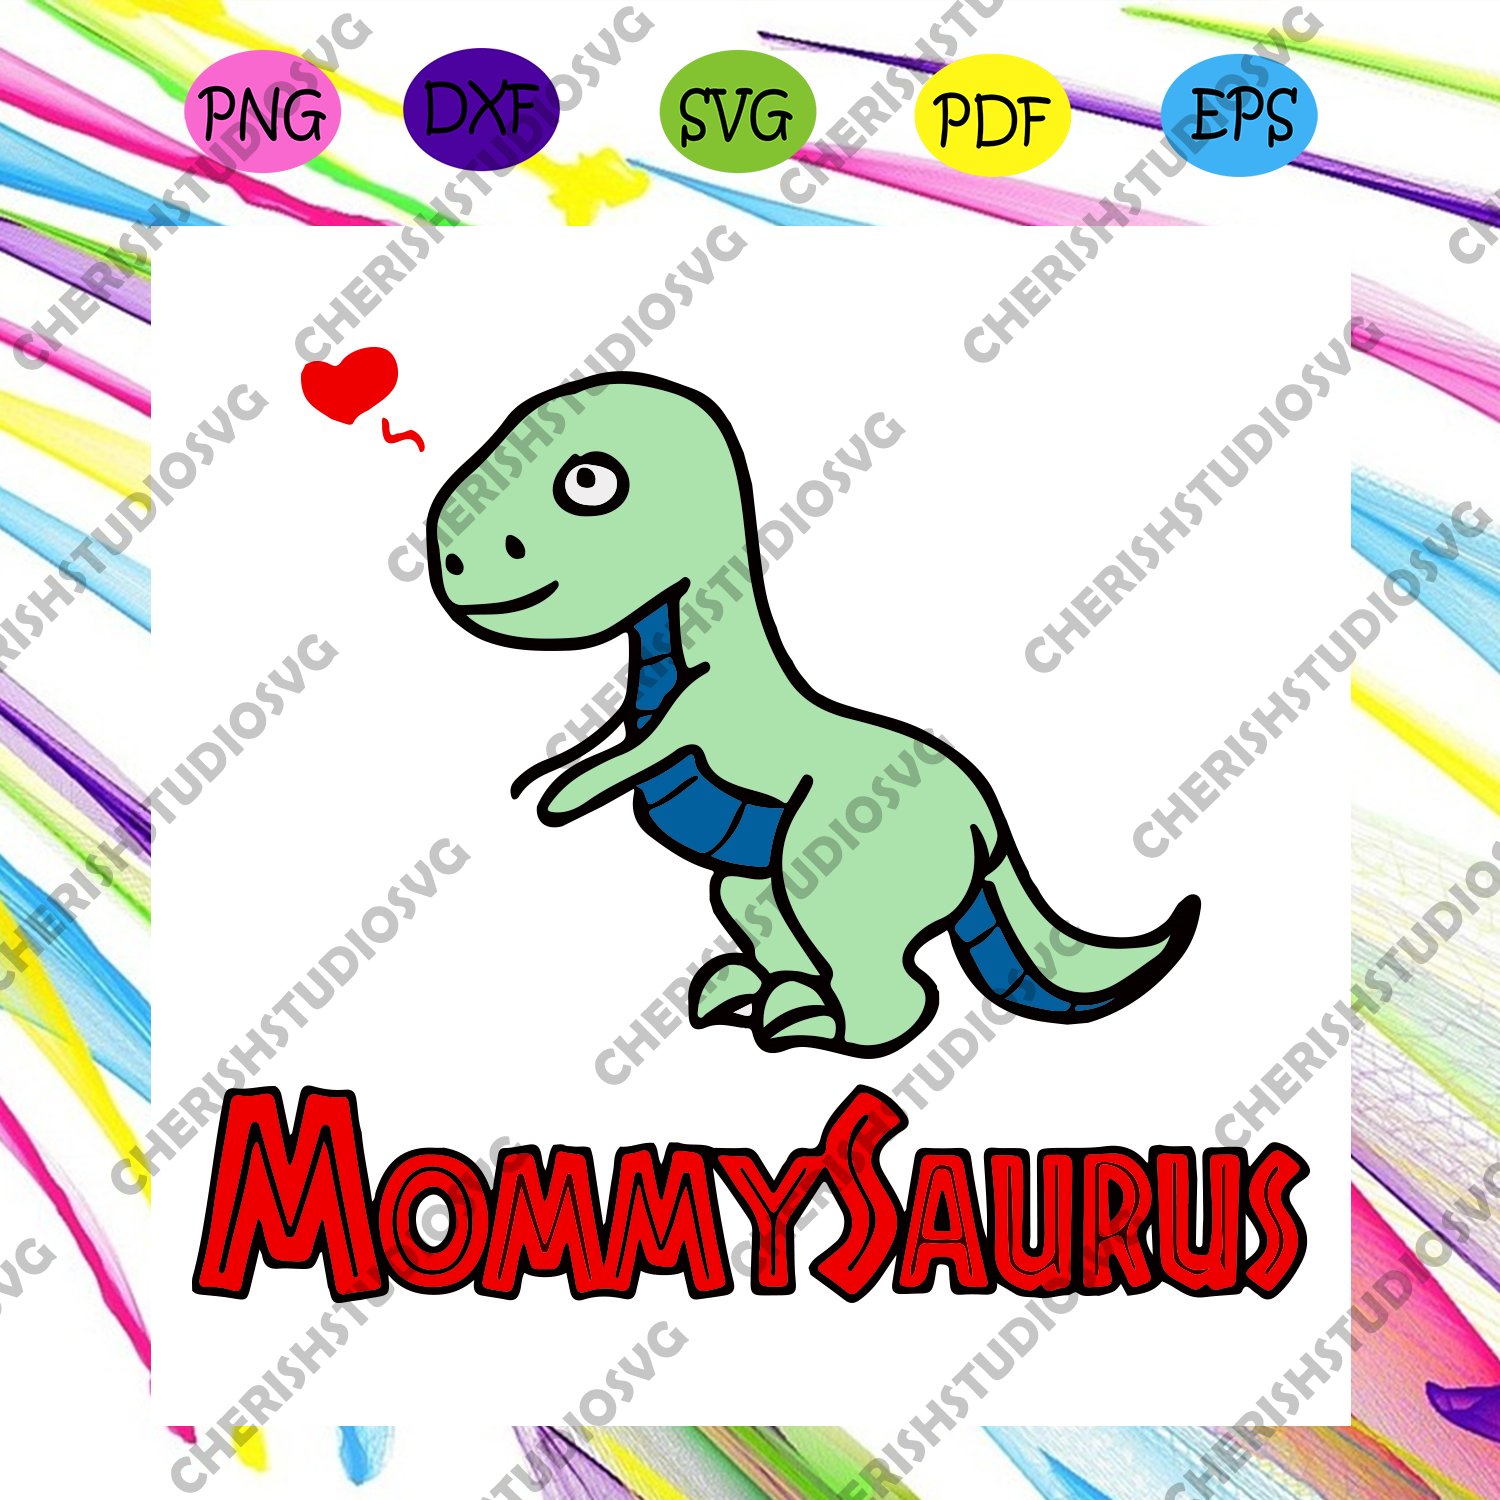 Download Mommy Saurus Svg Mothers Day Svg Mom Svg Dinosaur Svg Dinosaur Mom Cherishsvgstudio